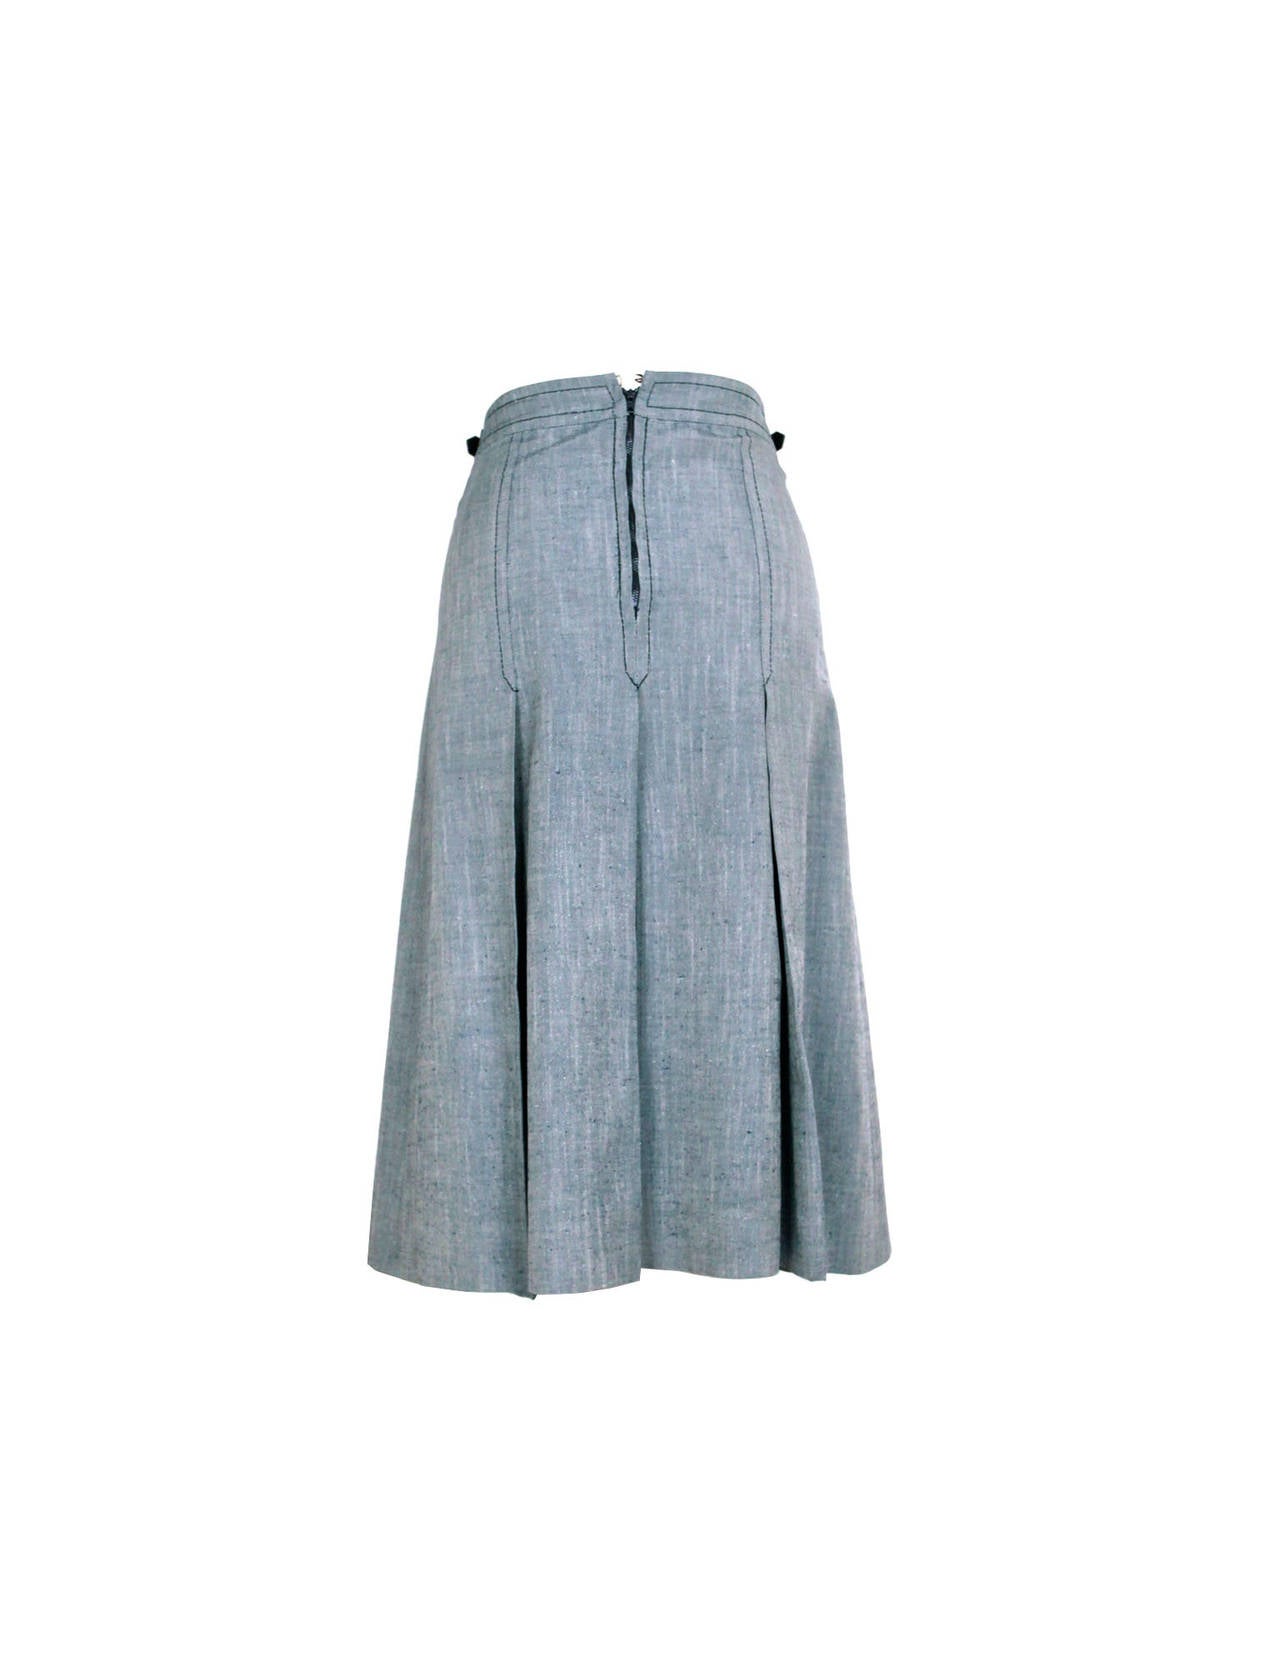 Vintage Celine 1970's pleated skirt in navy blue cotton-linen melange ...